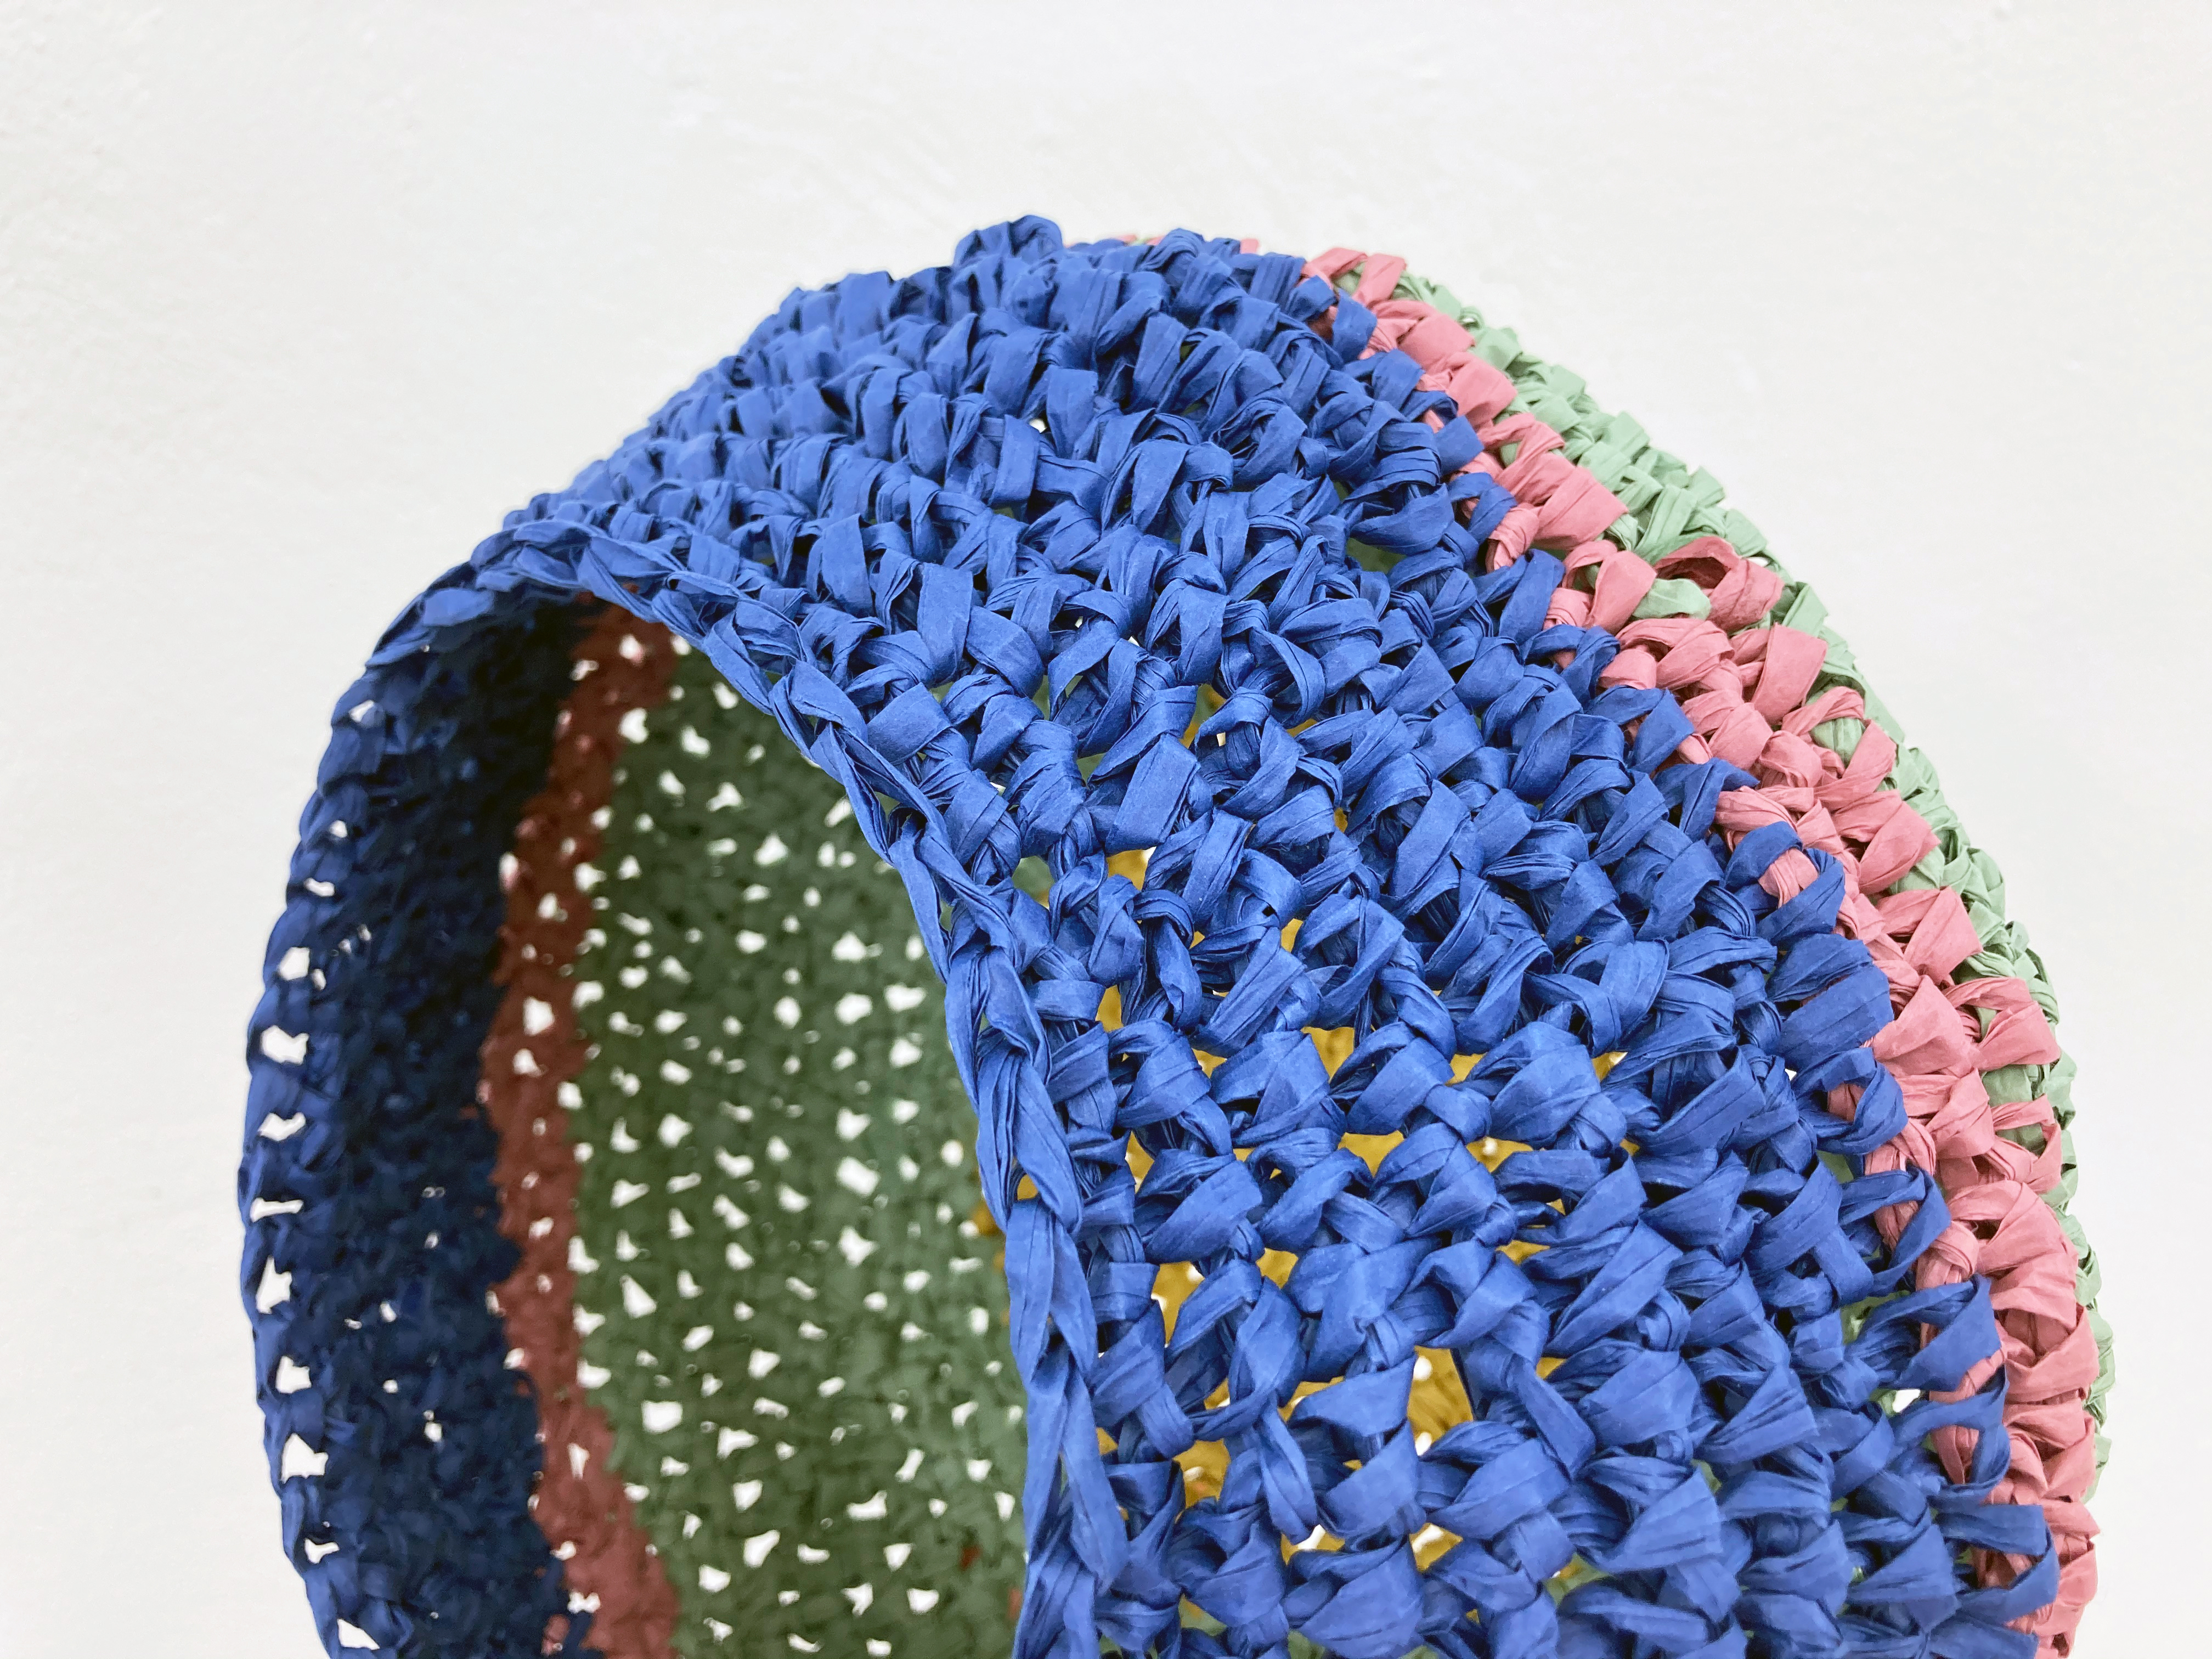 PaperPhine: Paper Raffia Crochet Basket - Tutorial